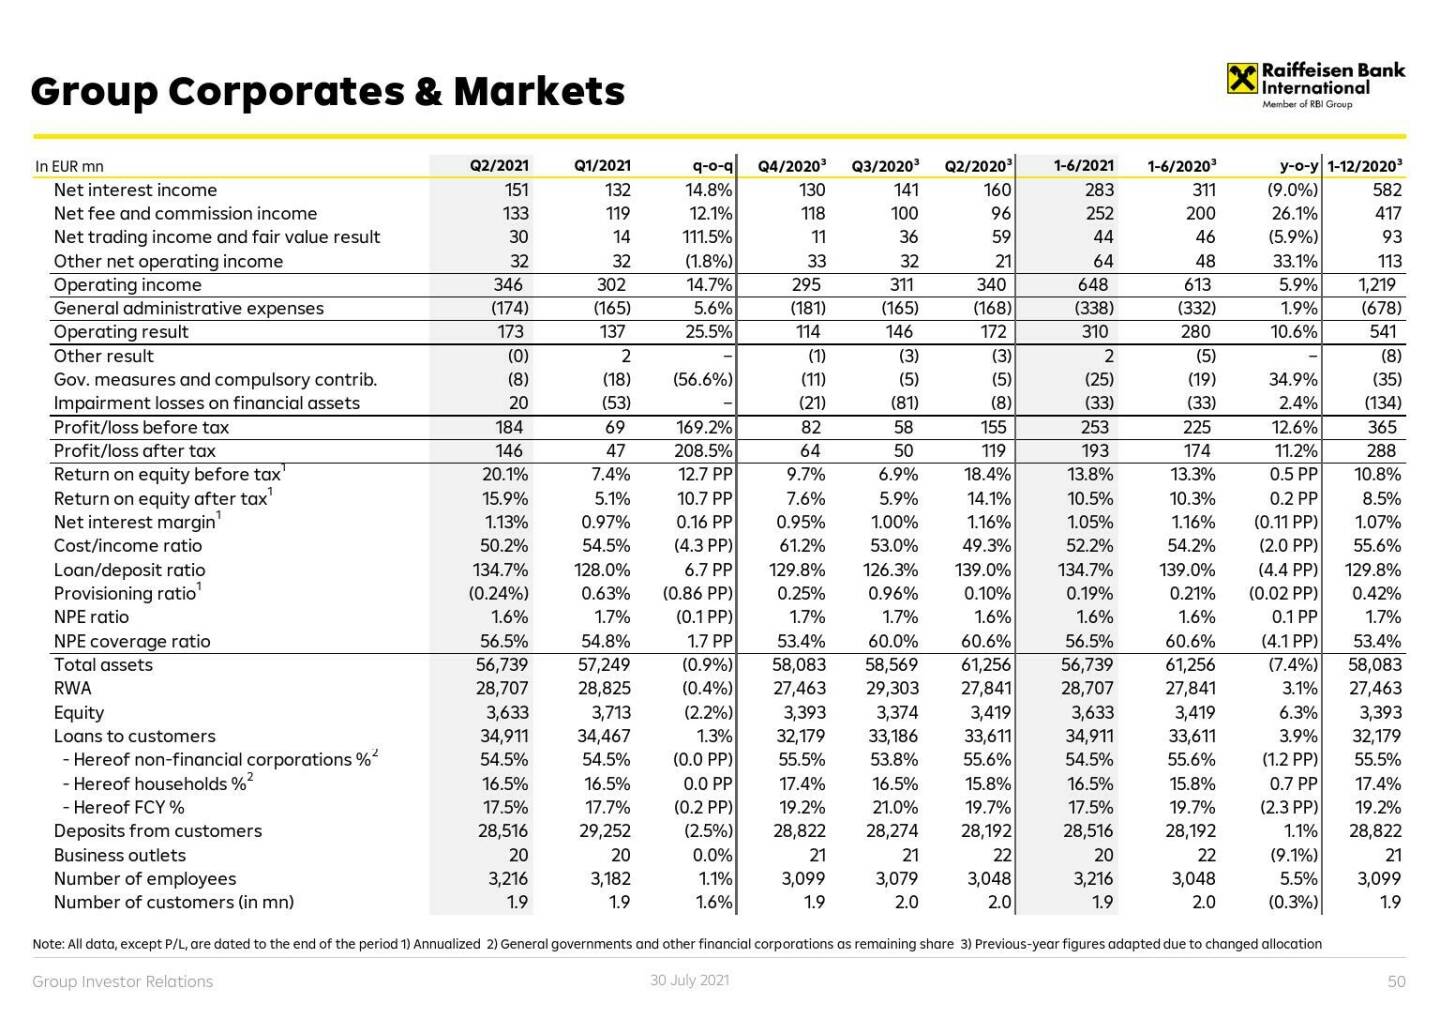 RBI - Group corporates & markets